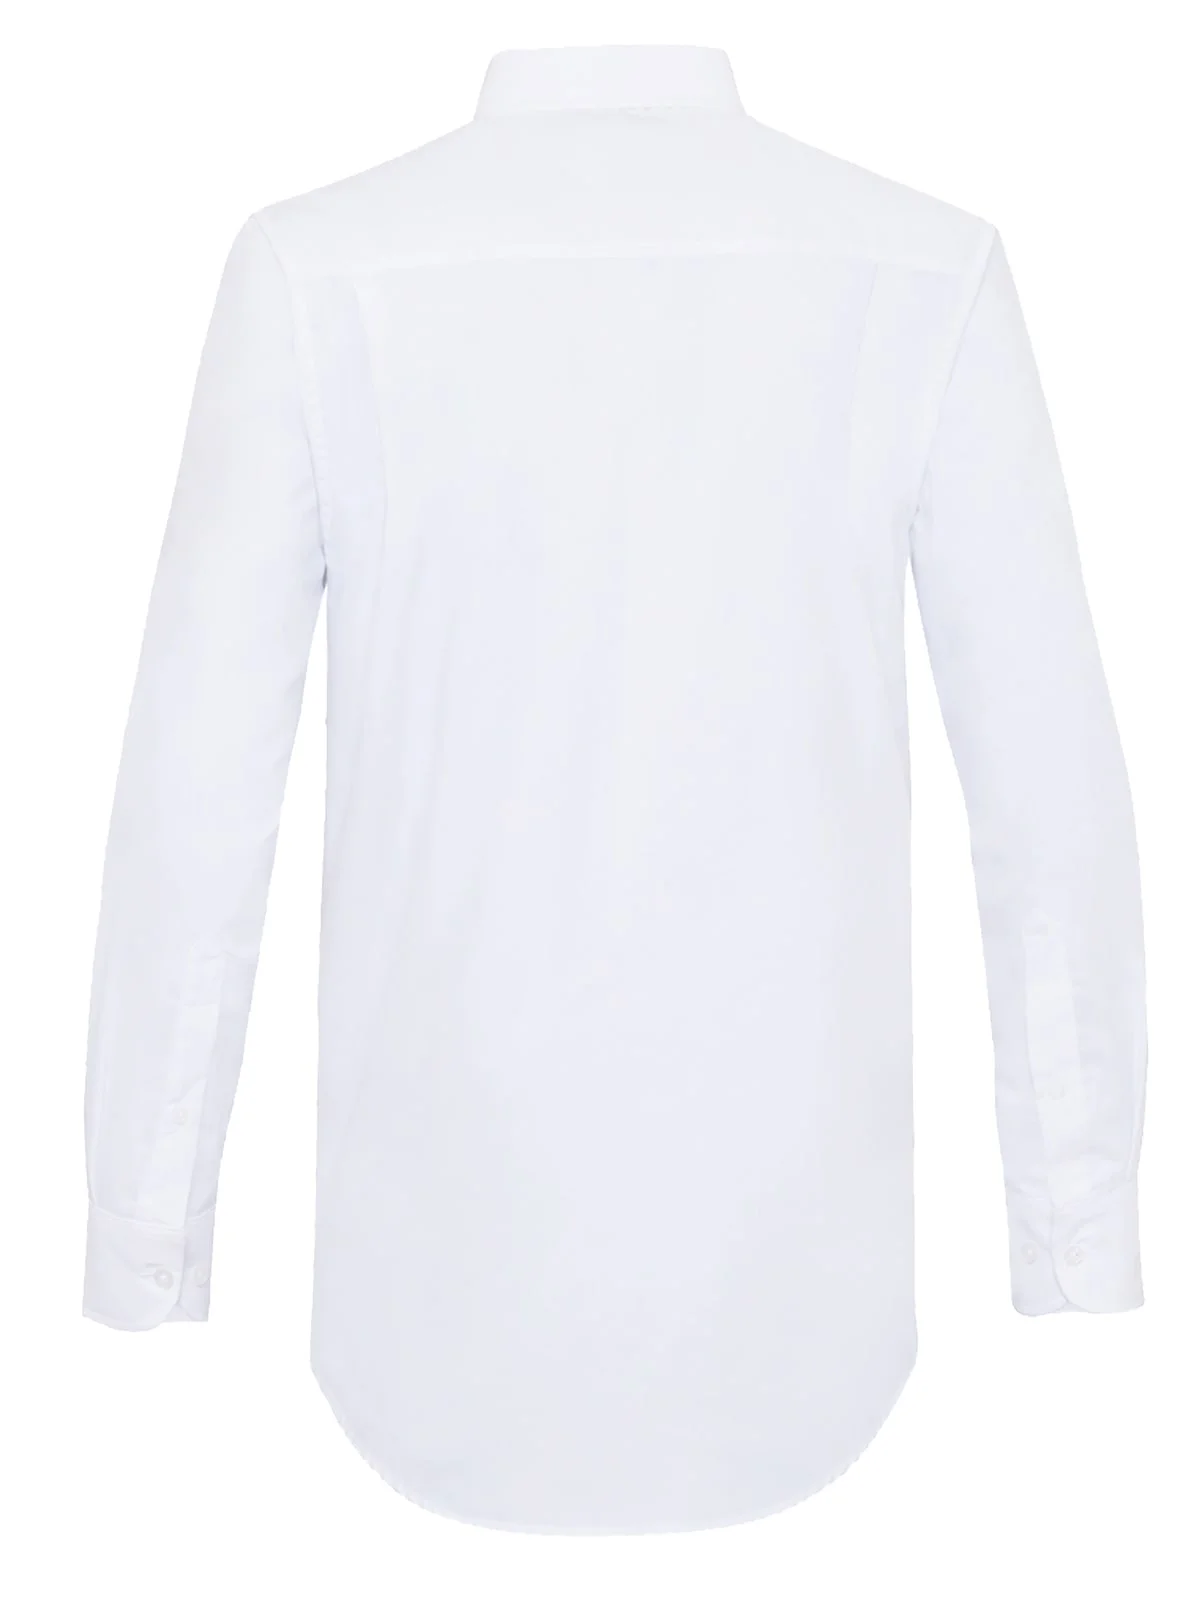 Long sleeve white oxford shirts